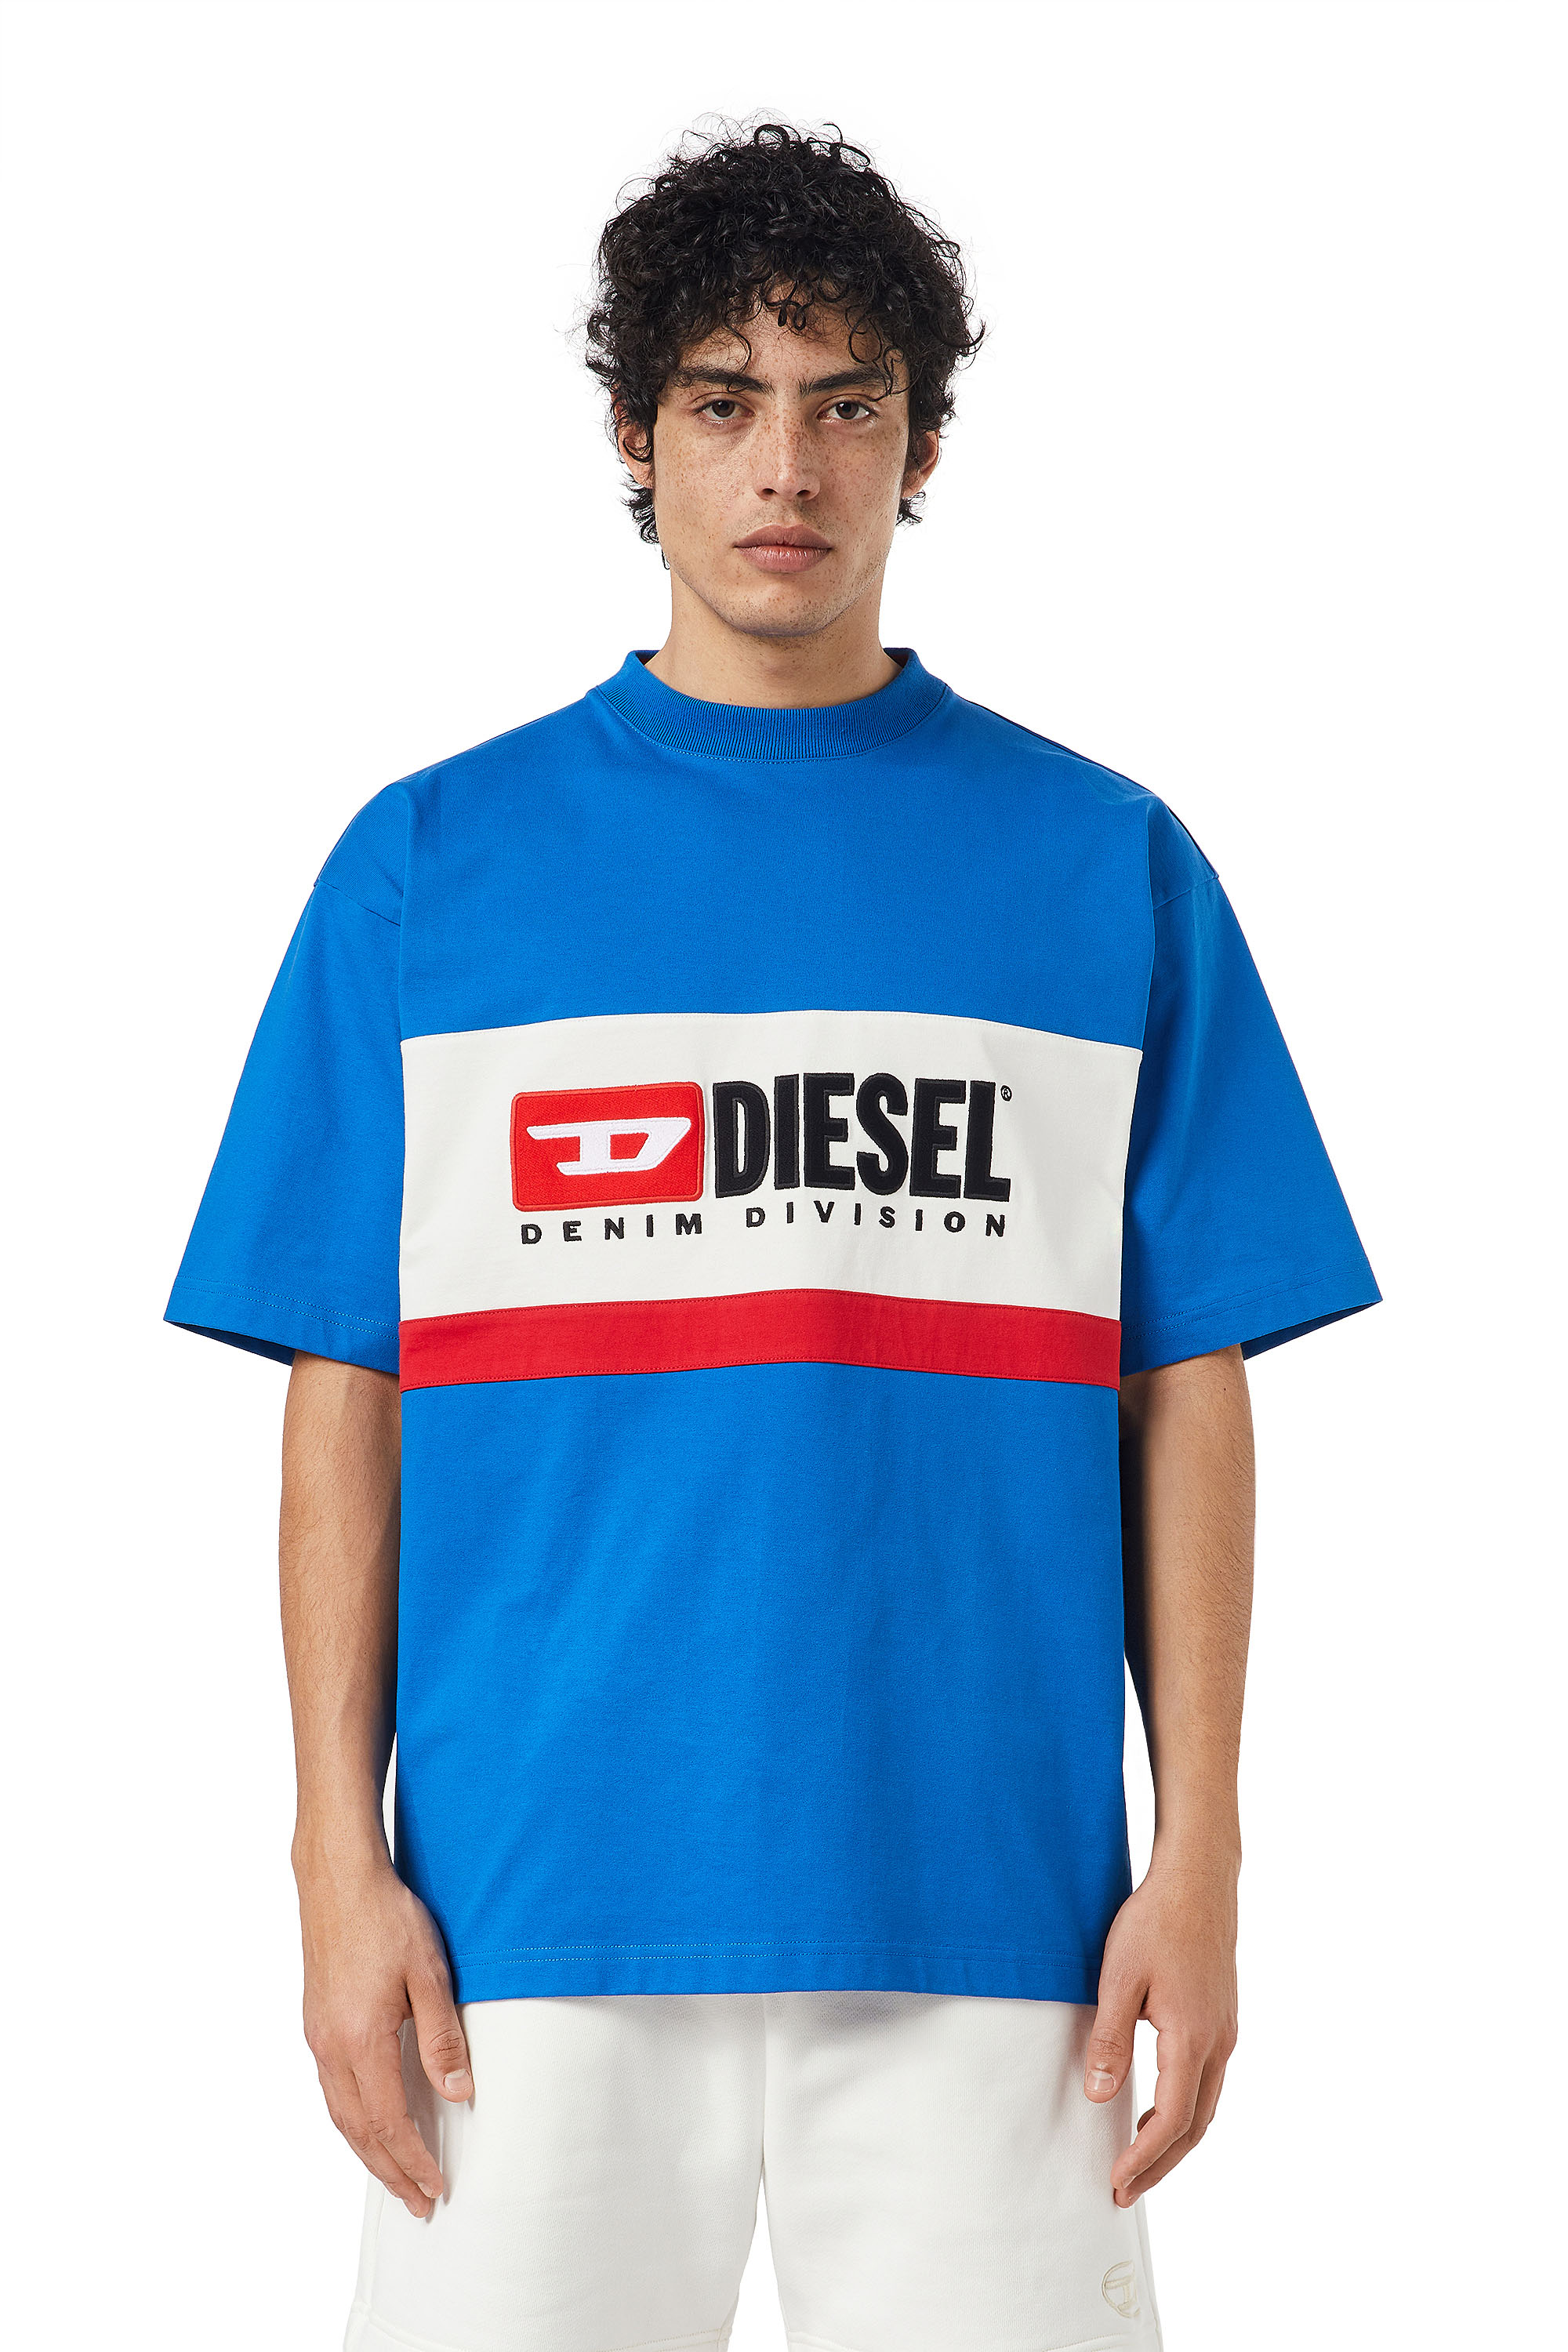 Diesel - T-STREAP-DIVISION, Blau - Image 1